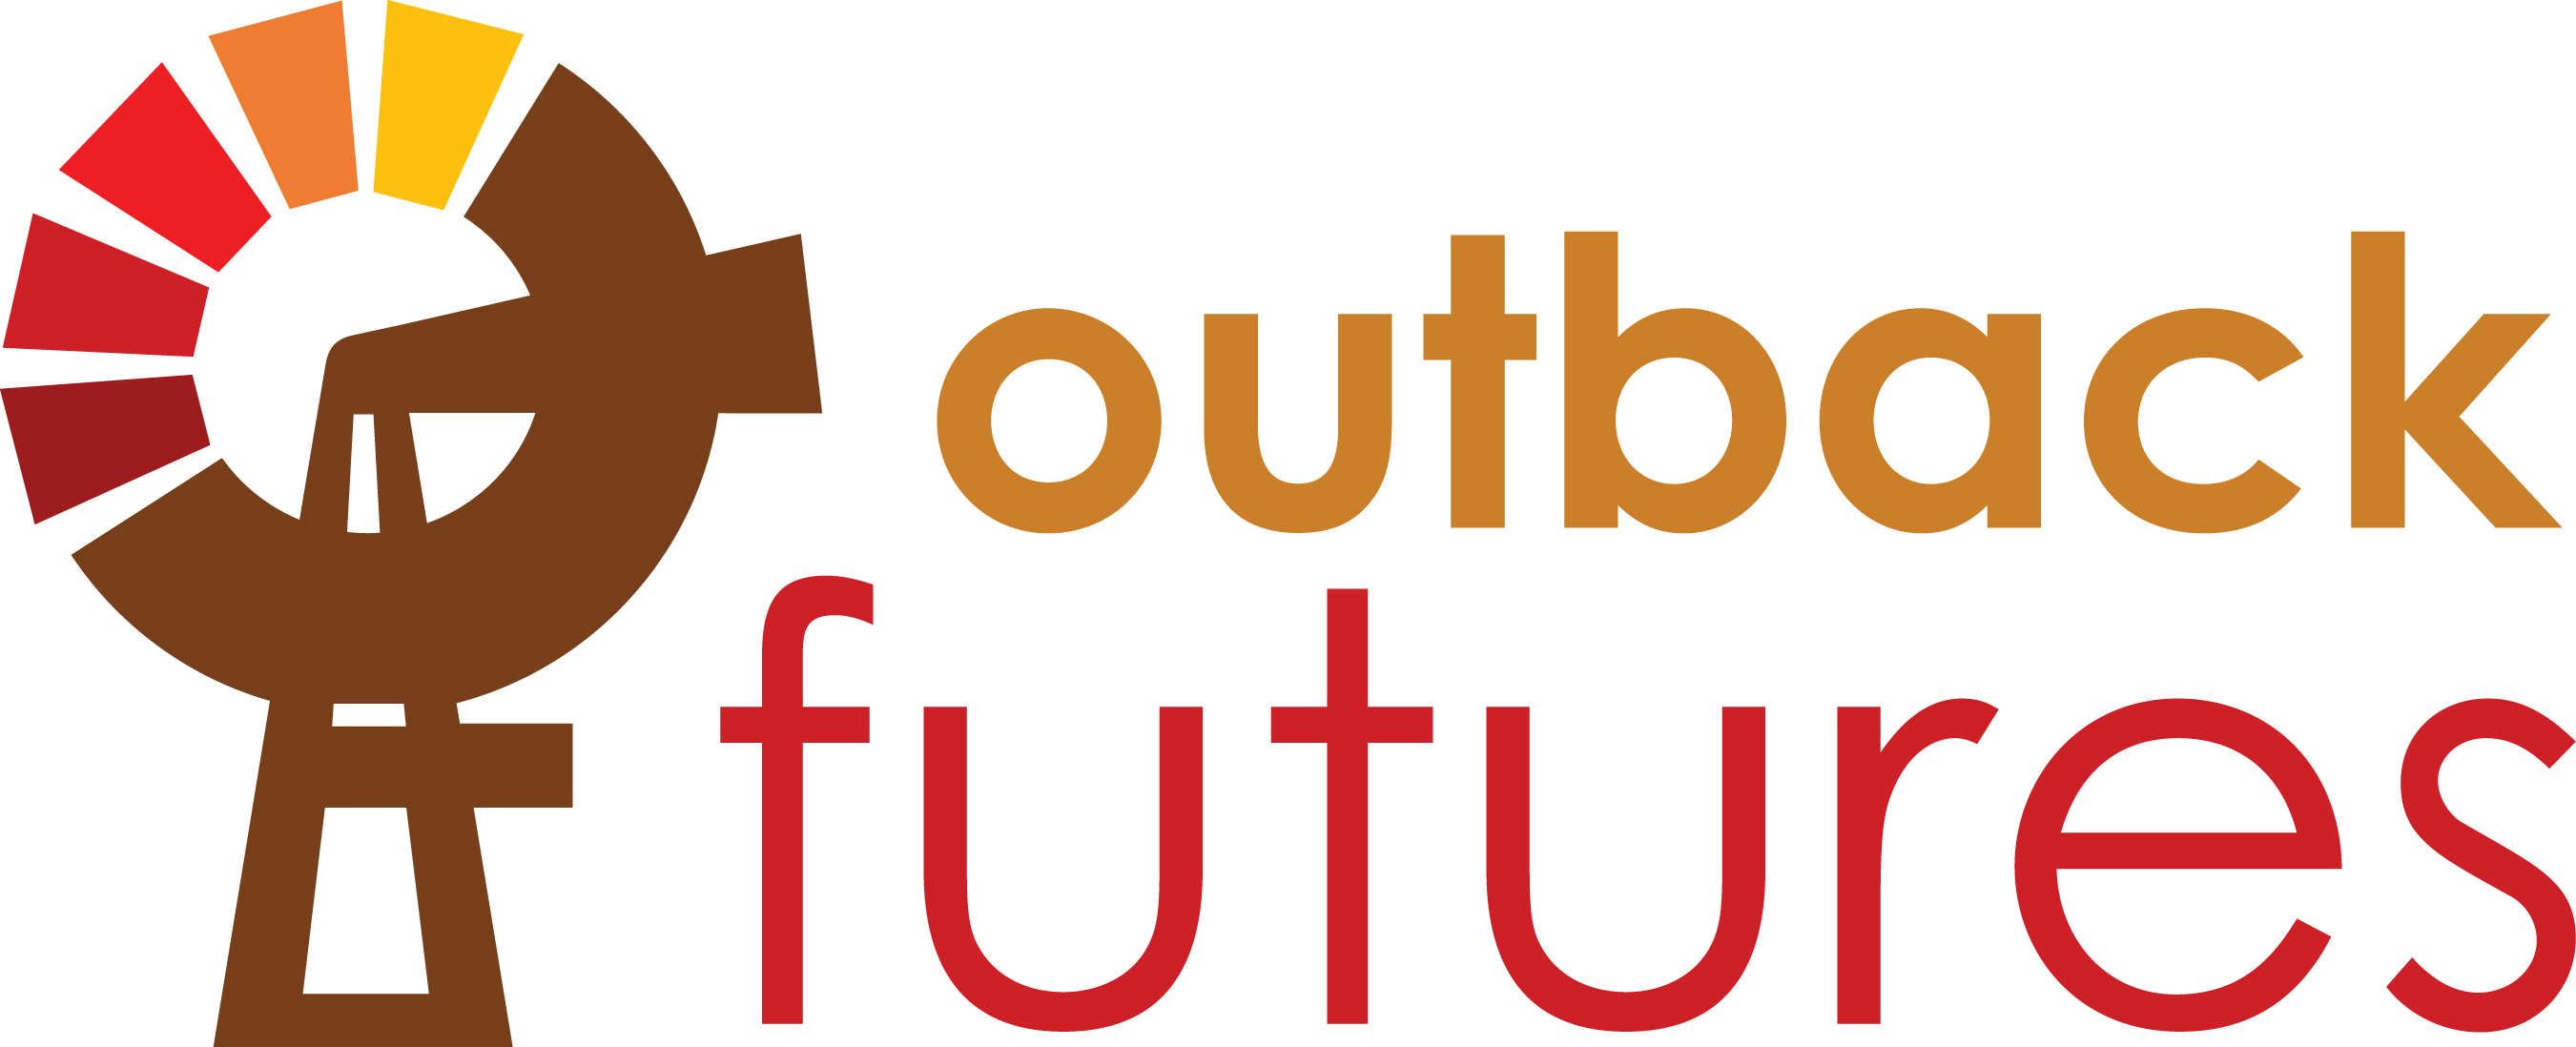 Outback Futures logo